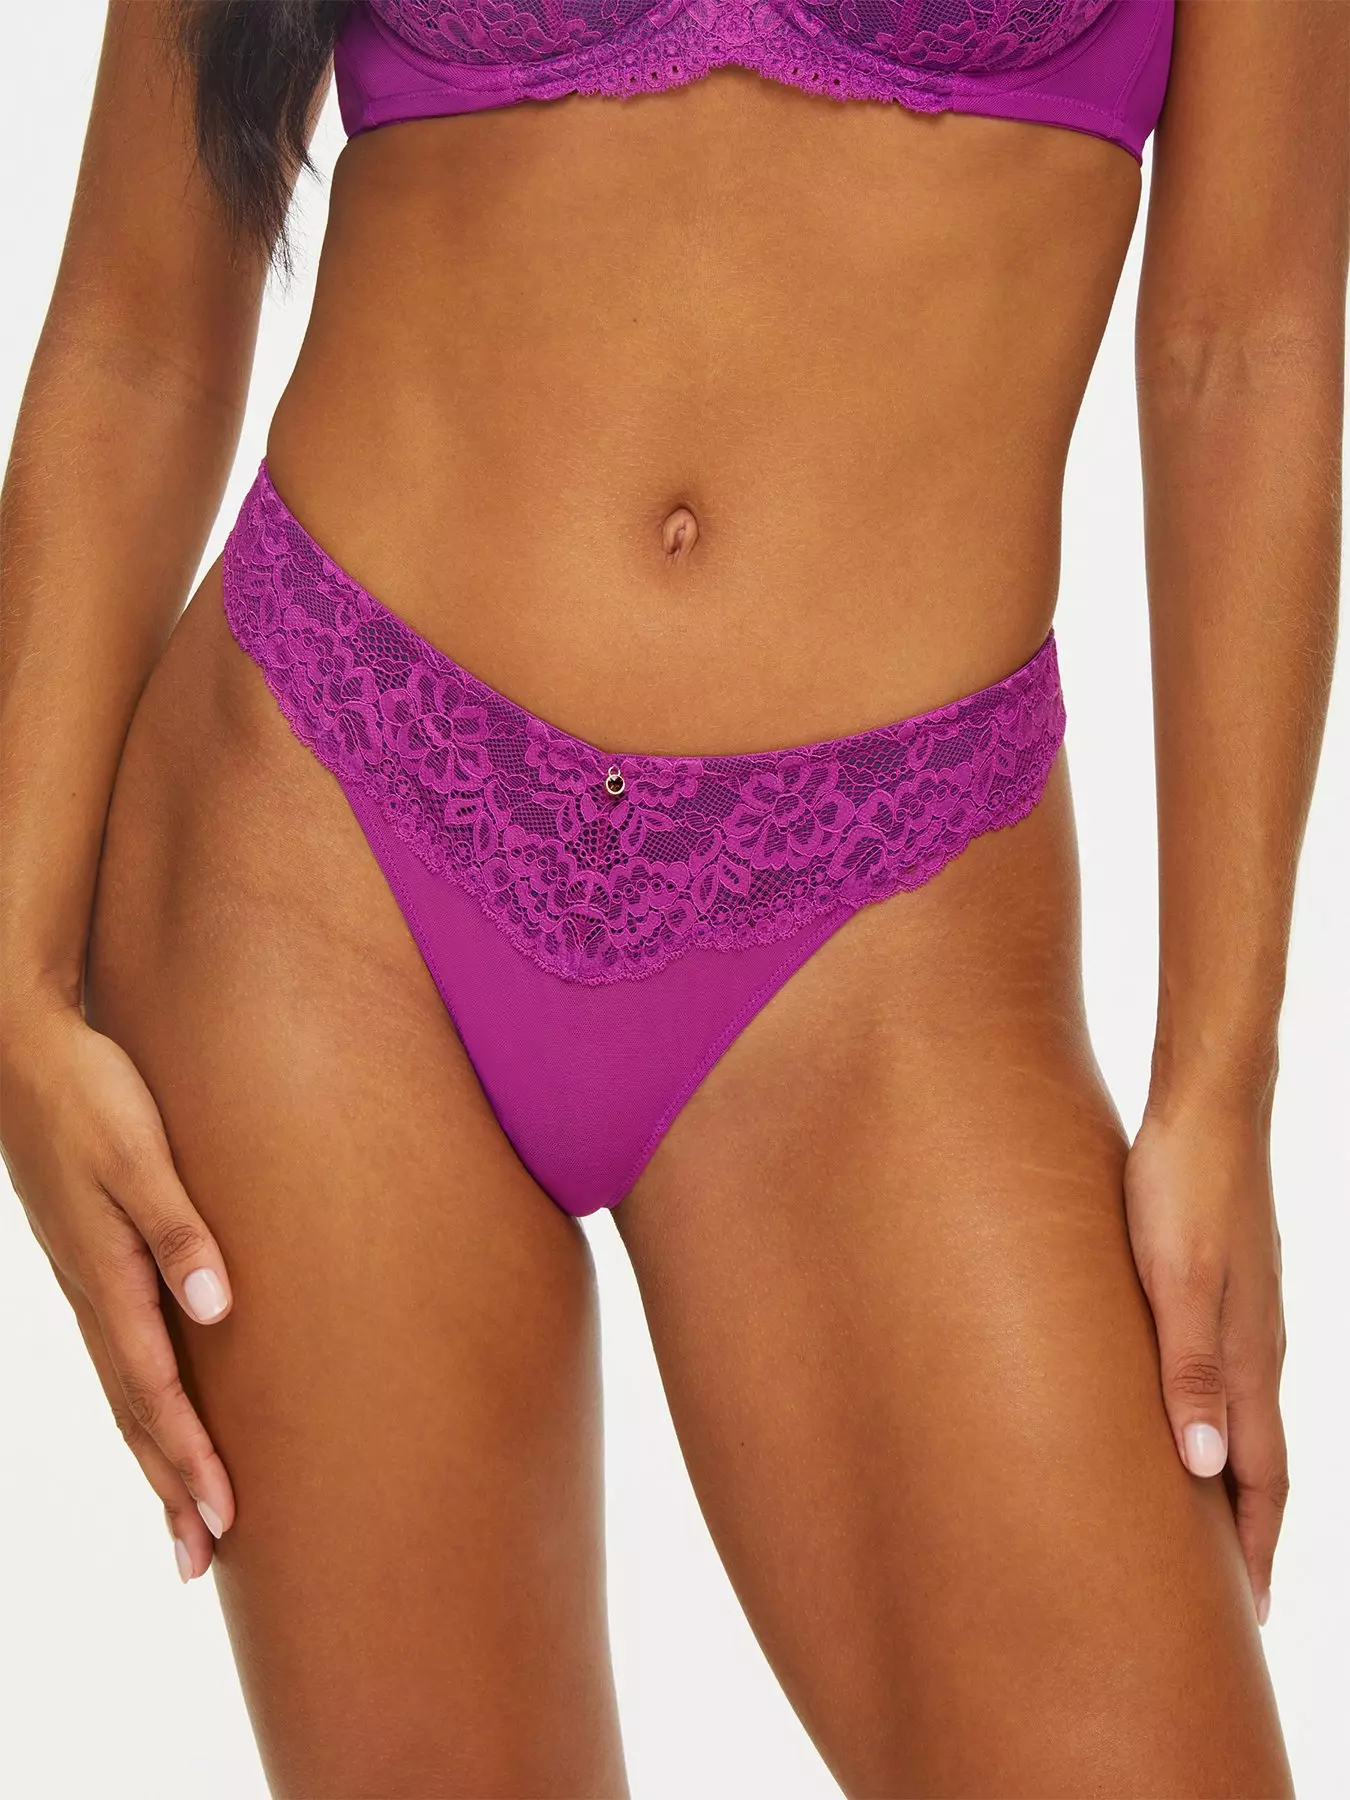 Ann Summers Katya Briefs Underwear Pink/Black knickers Lingerie ALL SIZES  RRP£14